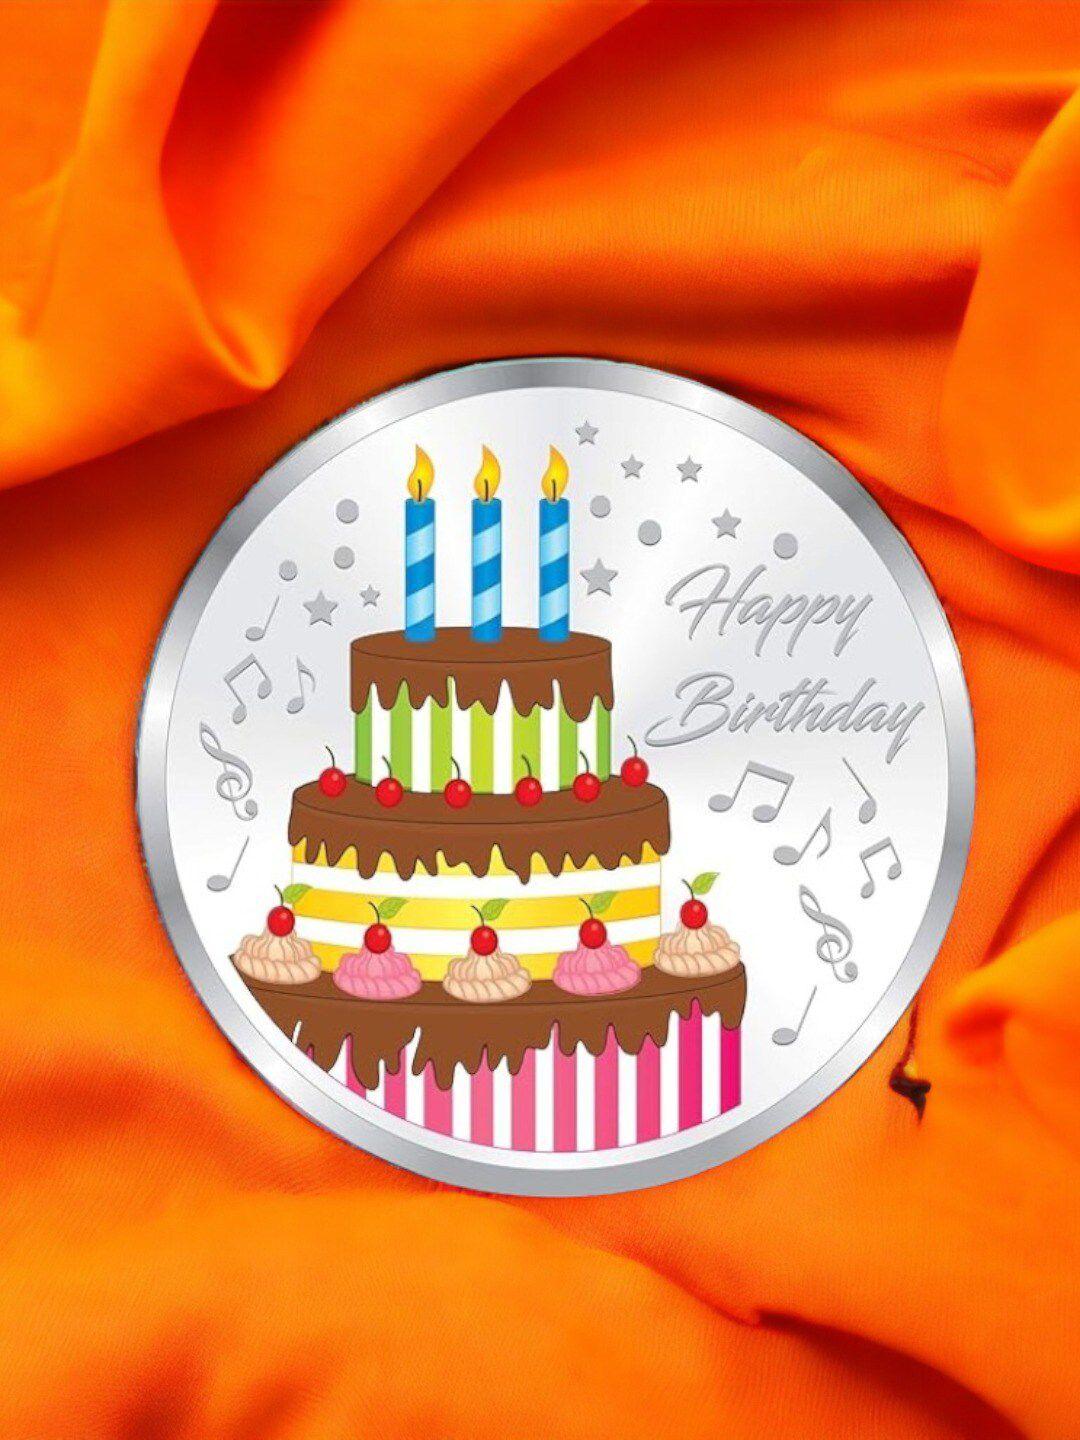 taraash cake design 999 round silver coin-10 gm